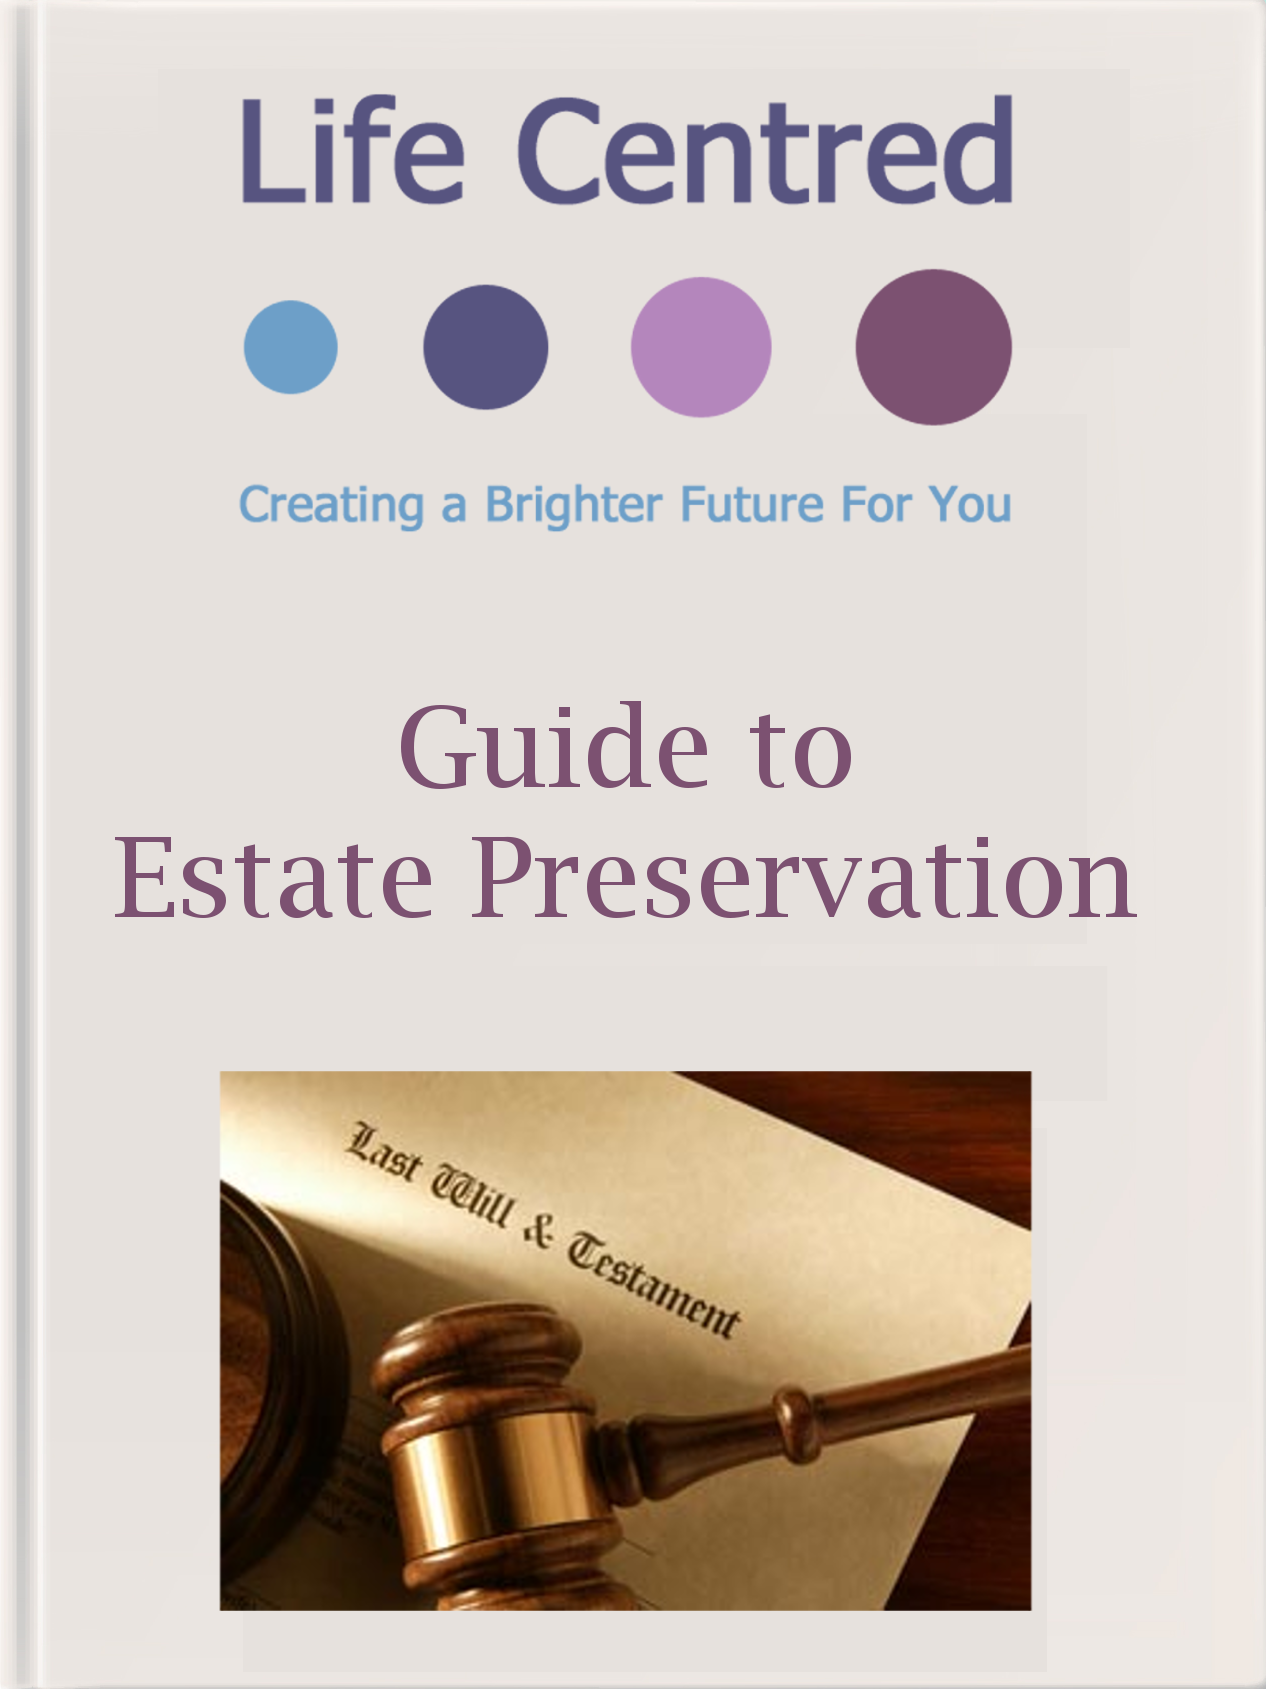 Download our Estate Preservation Guide